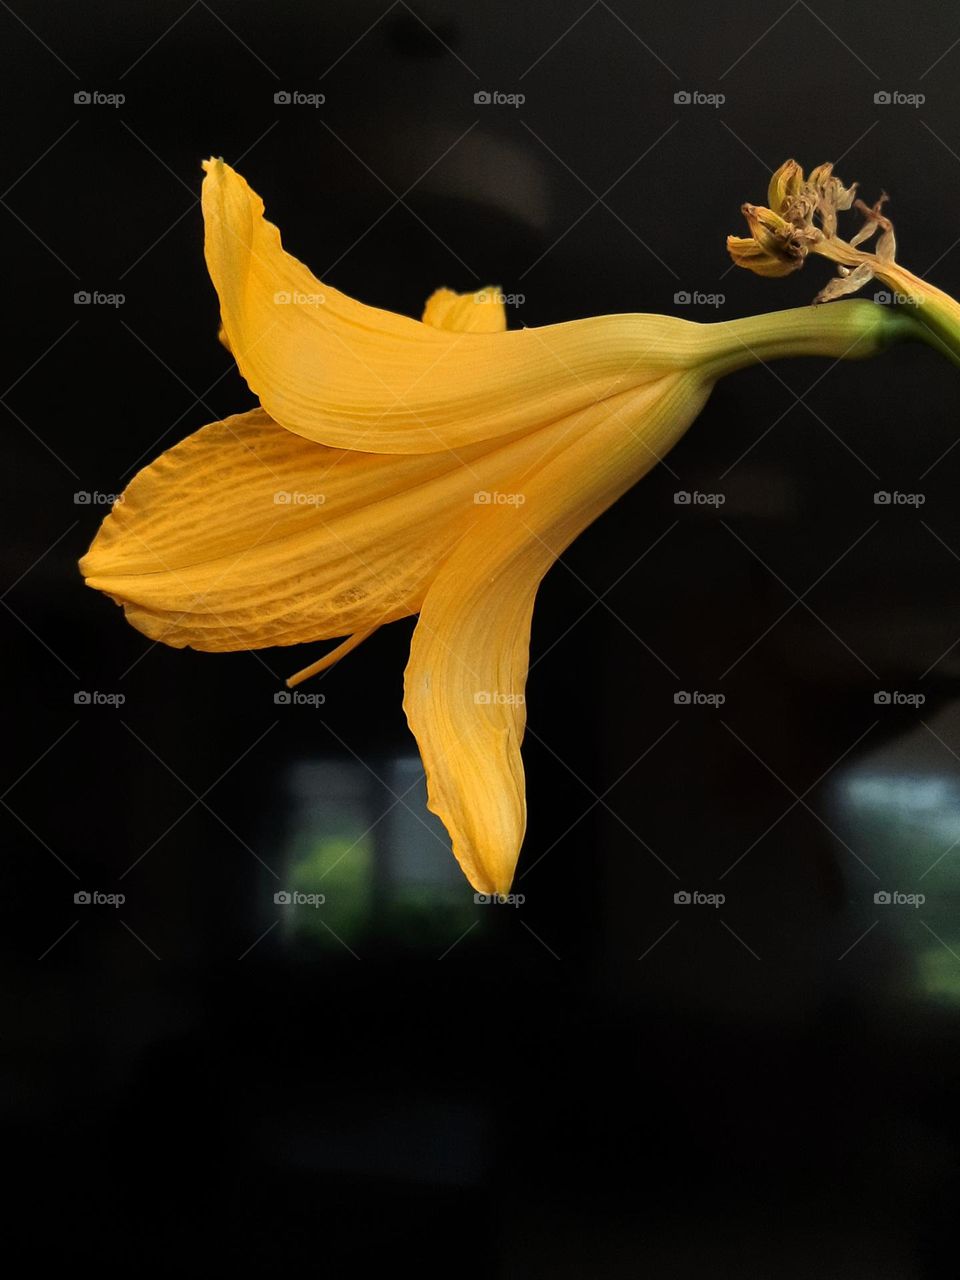 closeup of a yellow flower